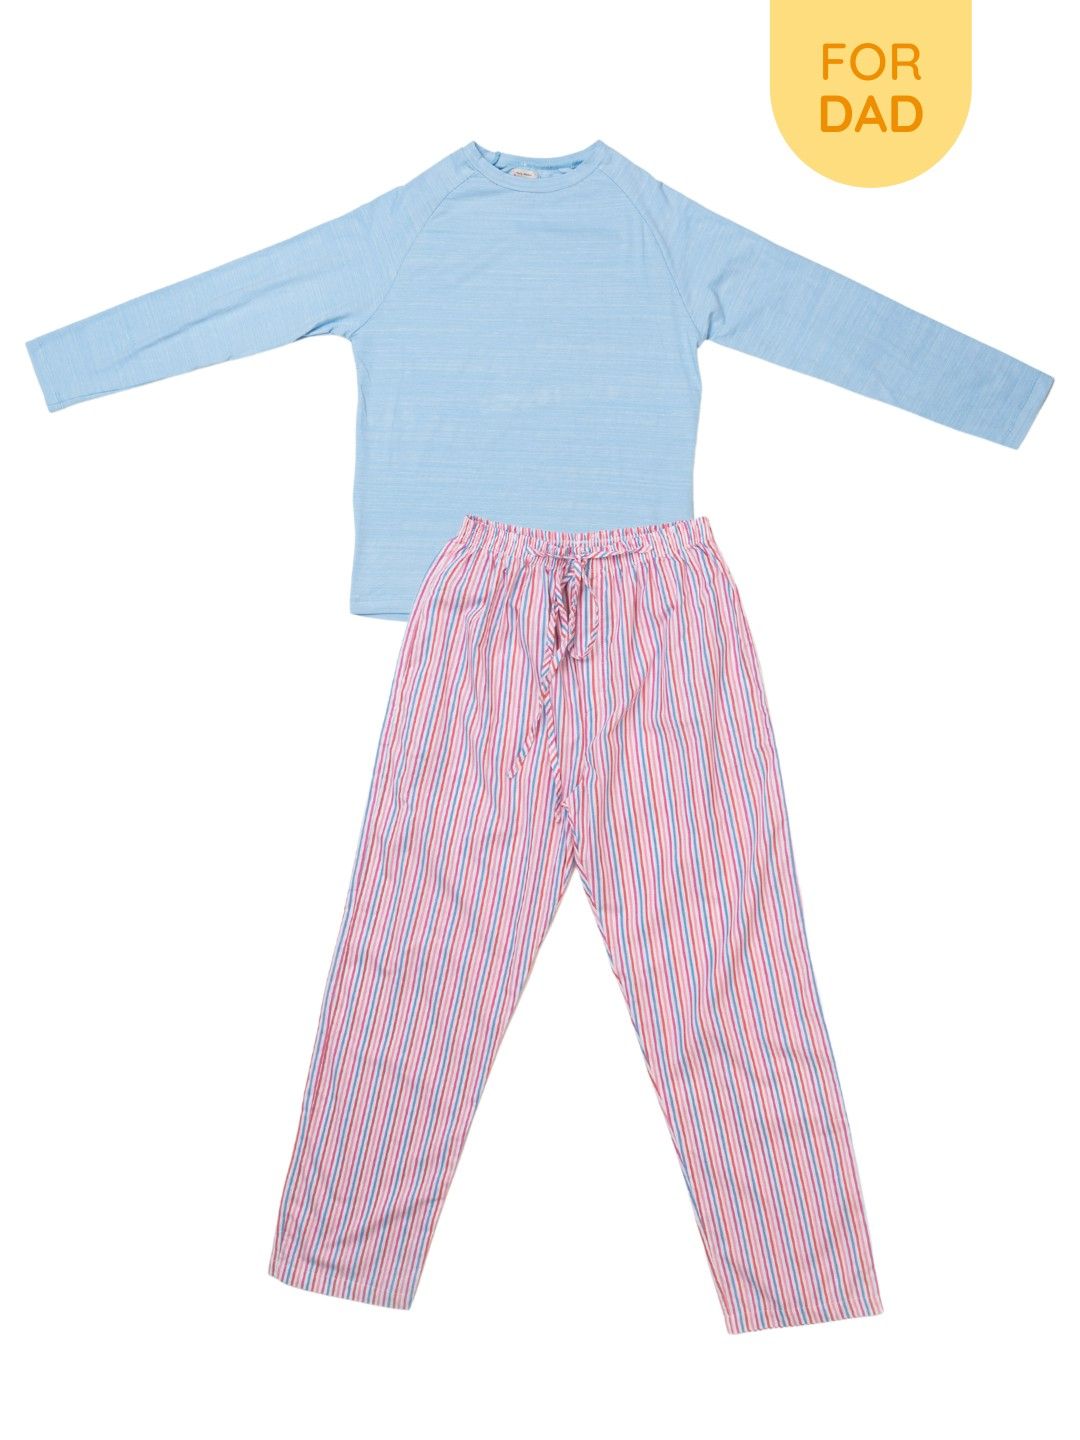 bean fashion Striped Sleep Pajama Set for Dad (No Color- Image 1)